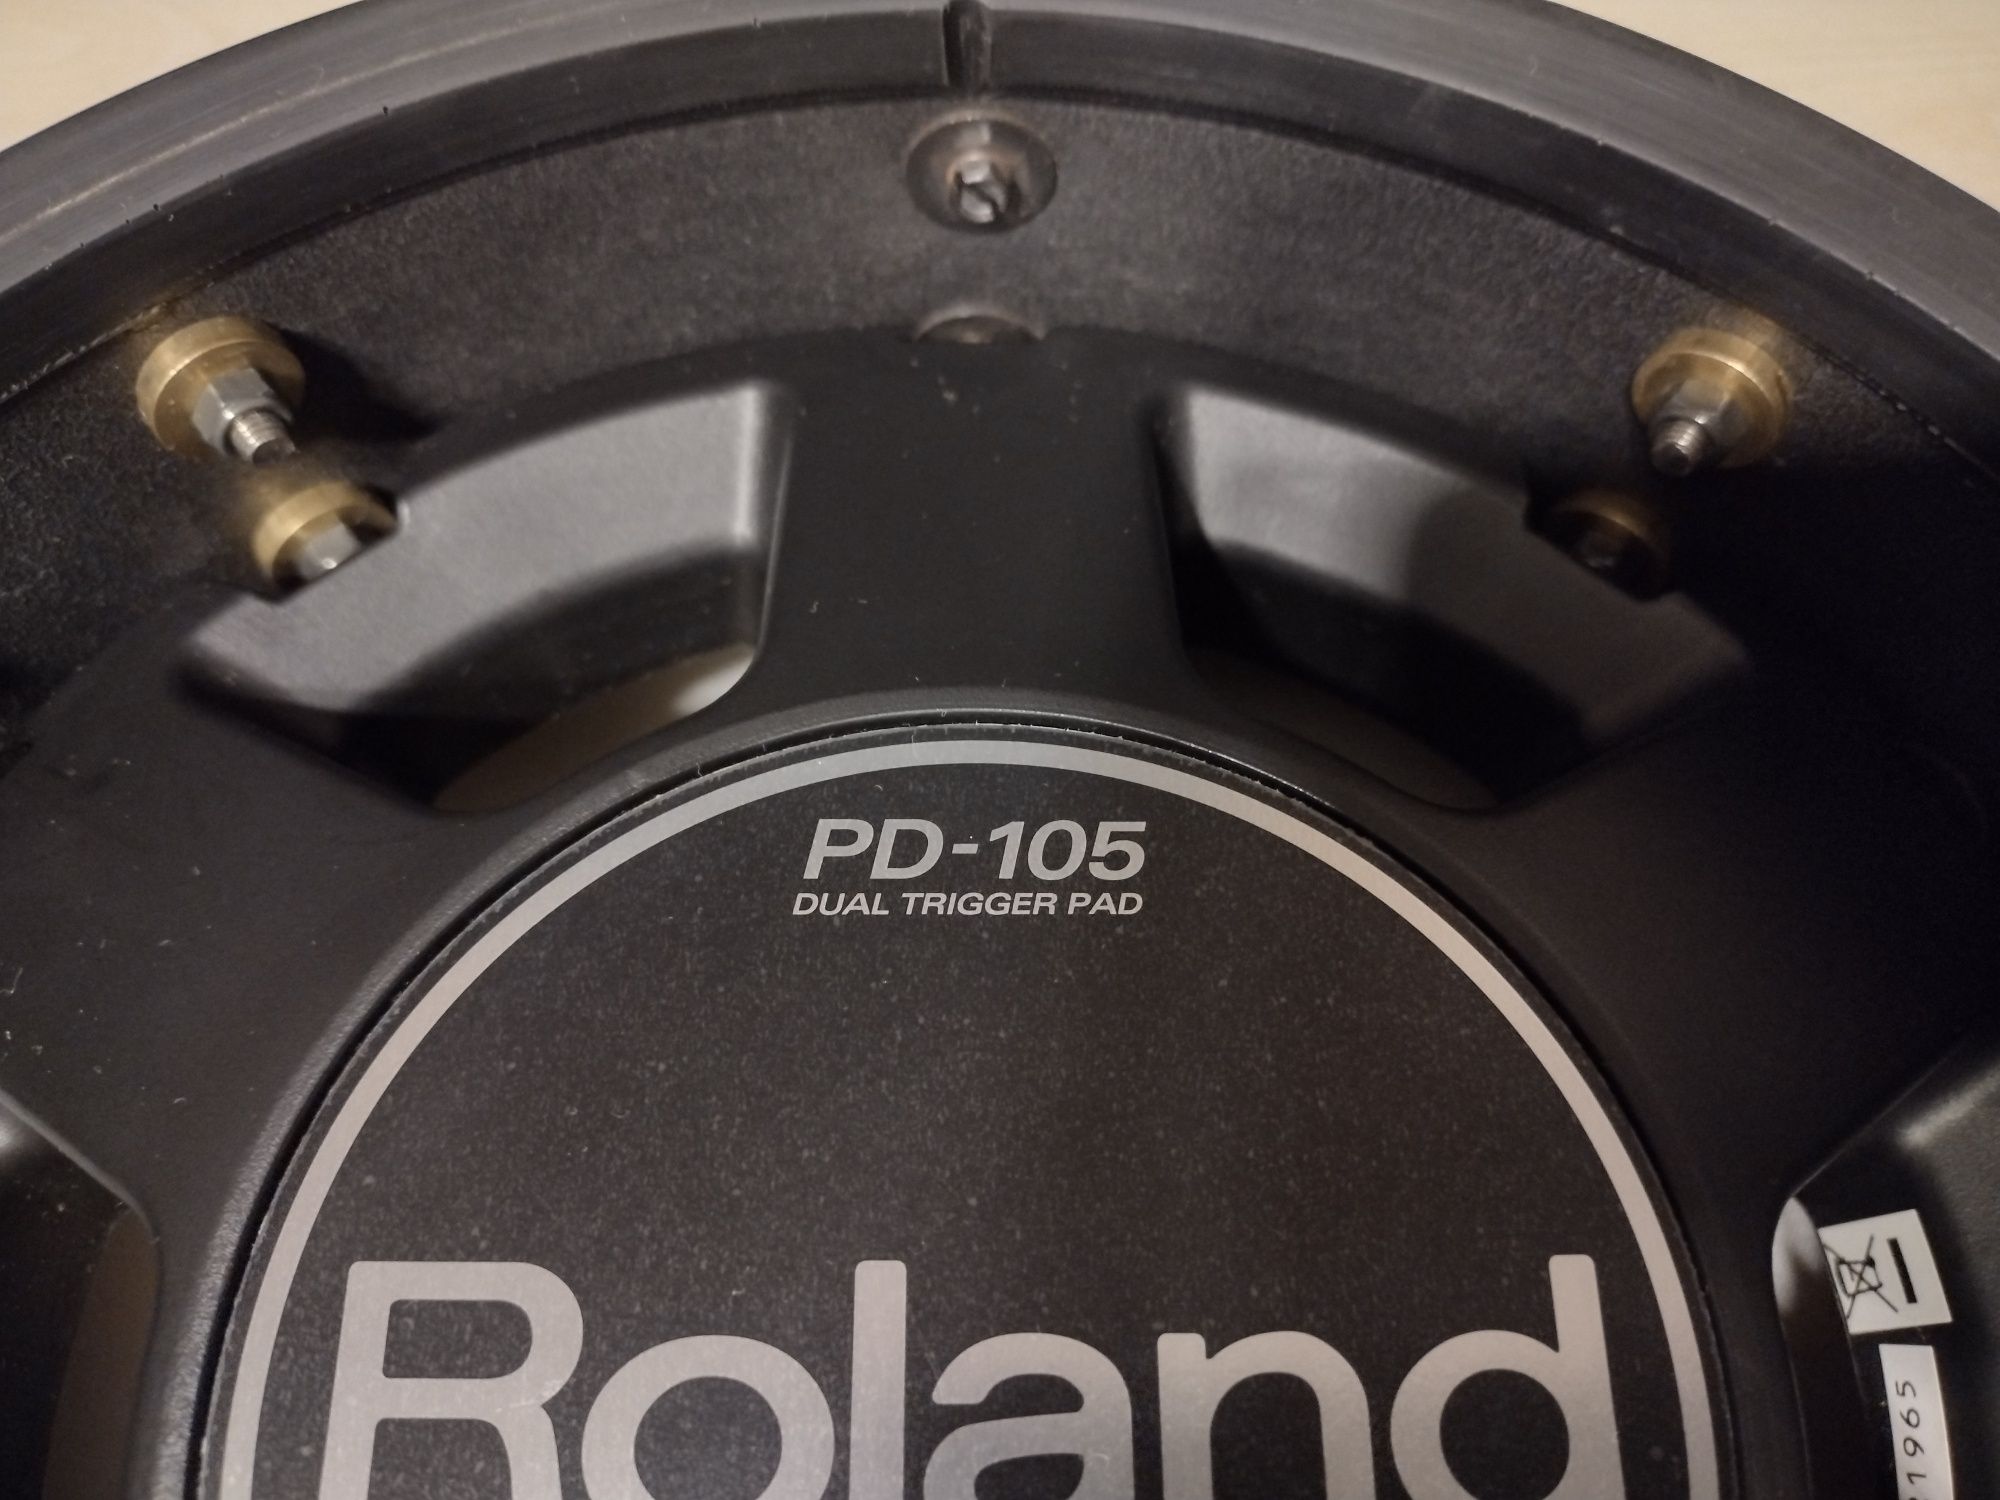 Roland PD 105 pad Japan